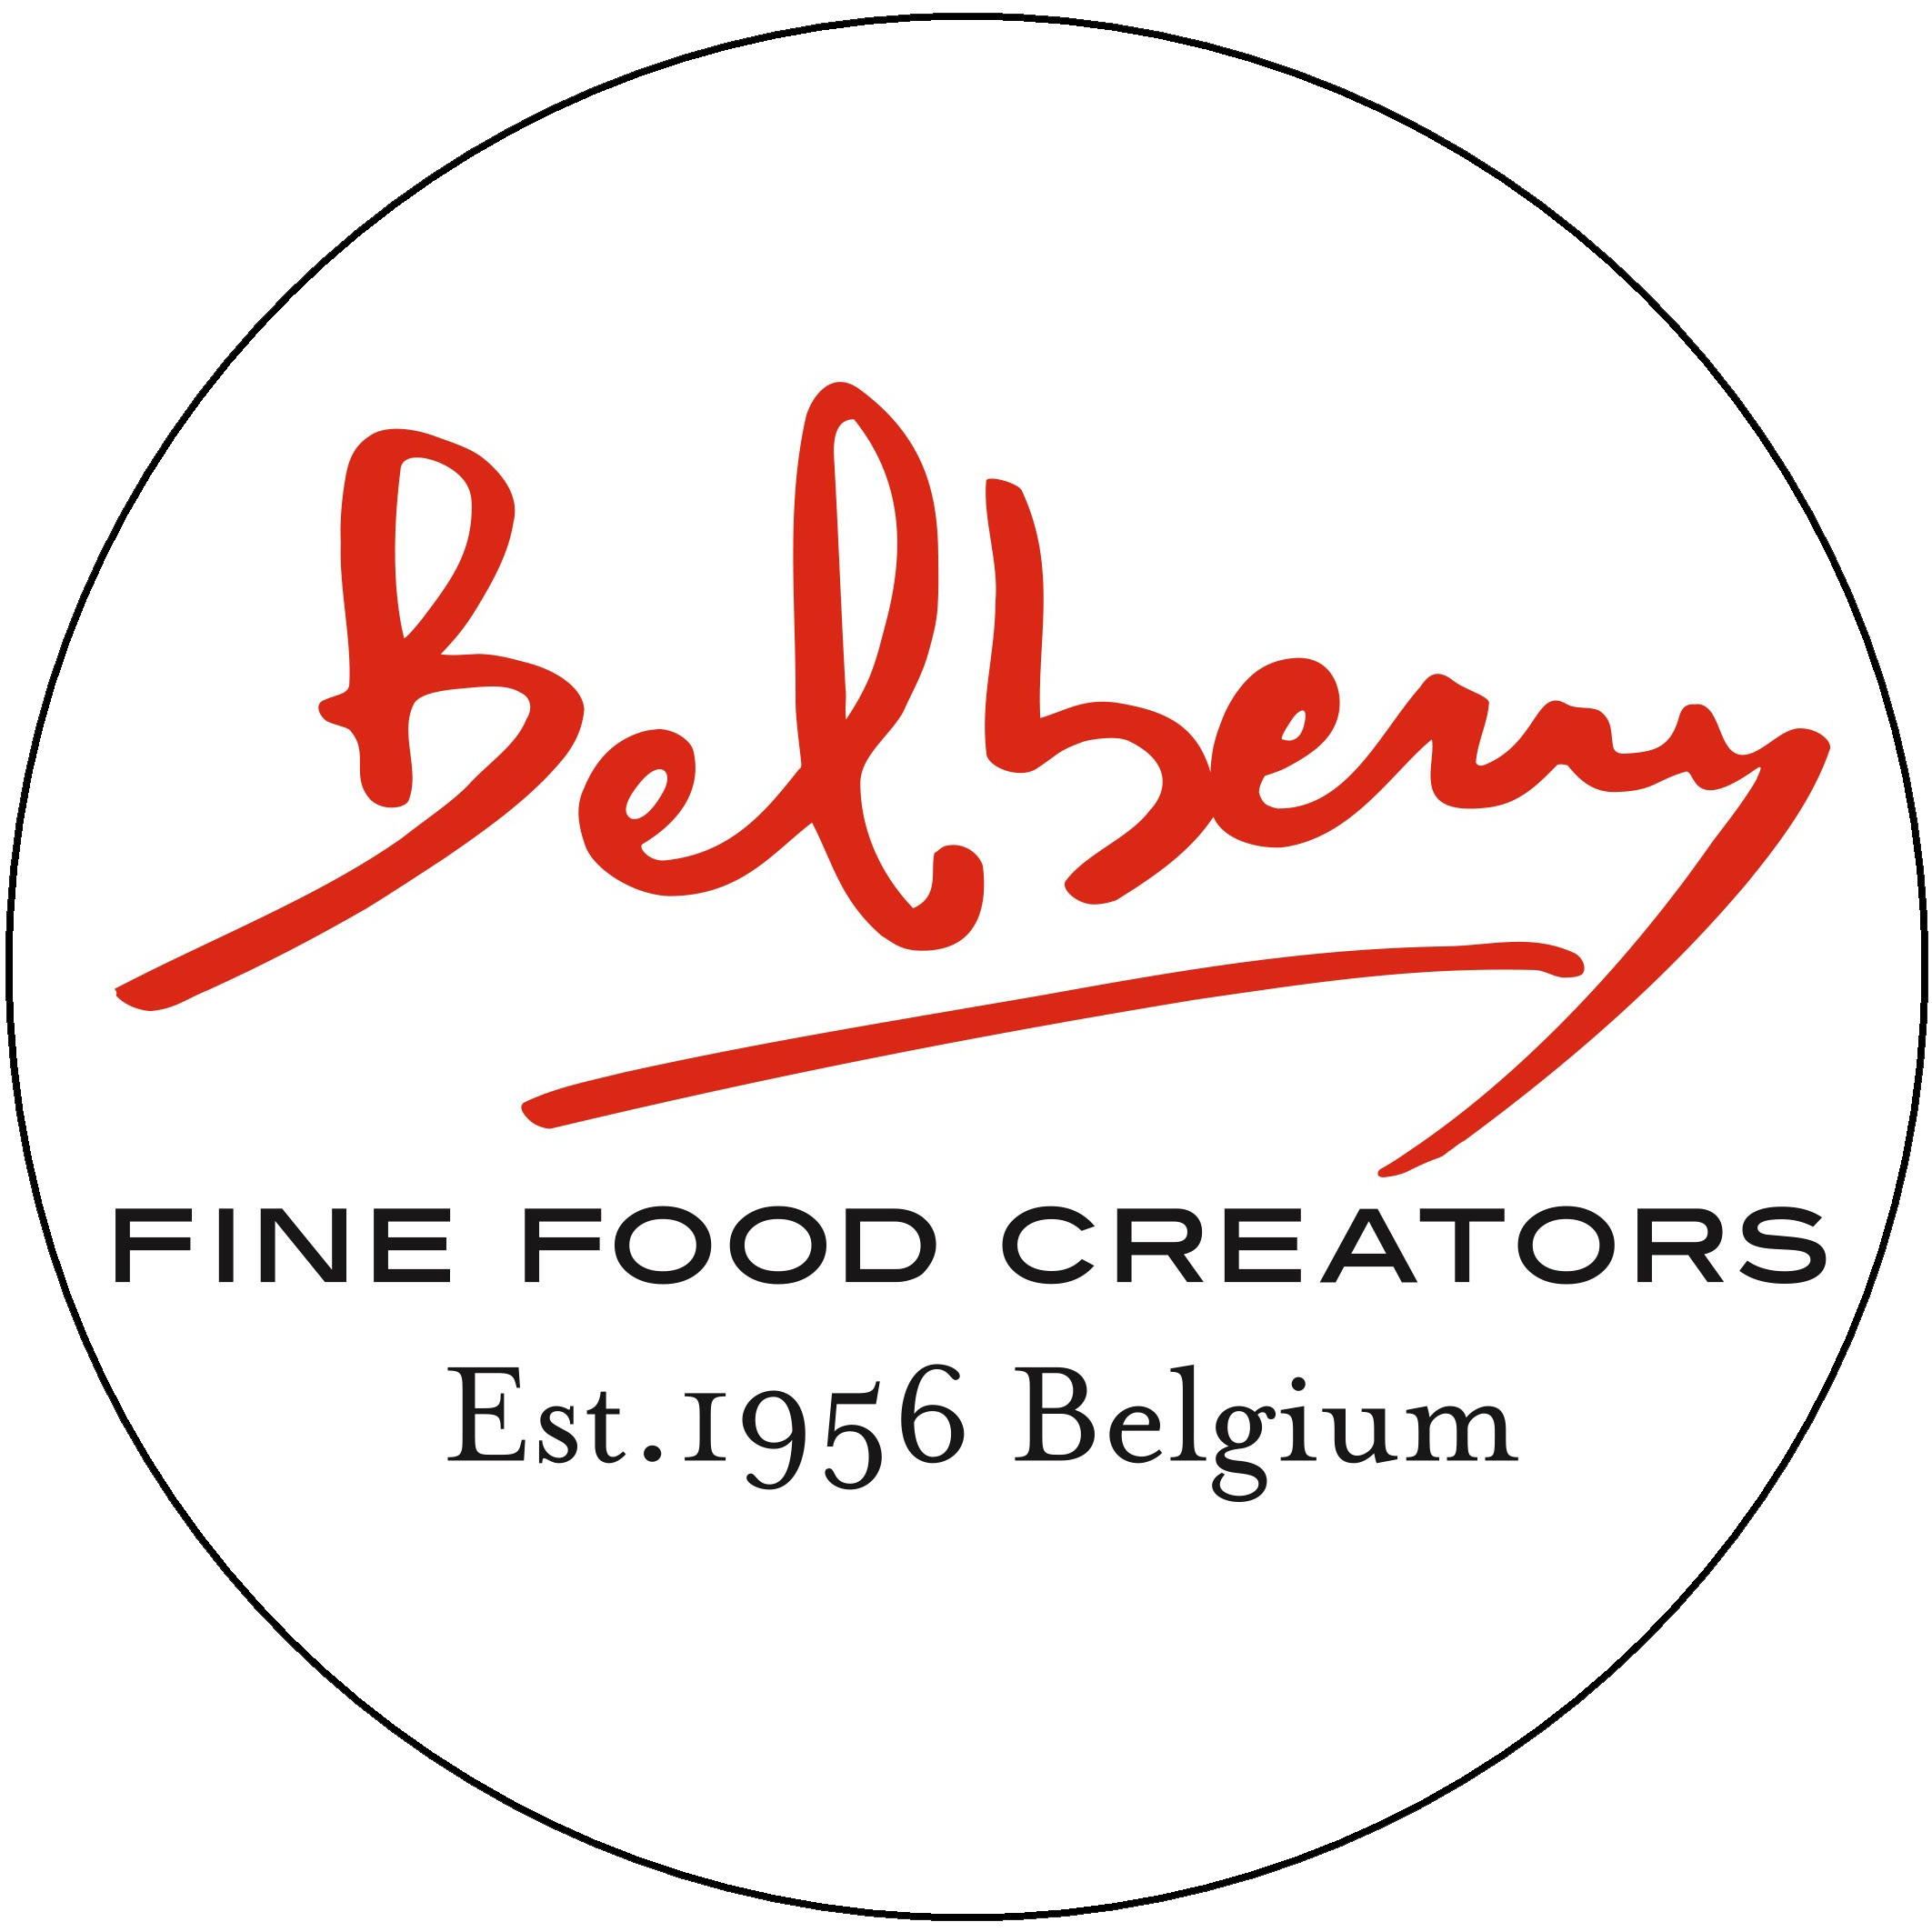 Belberry Fine Food Creators